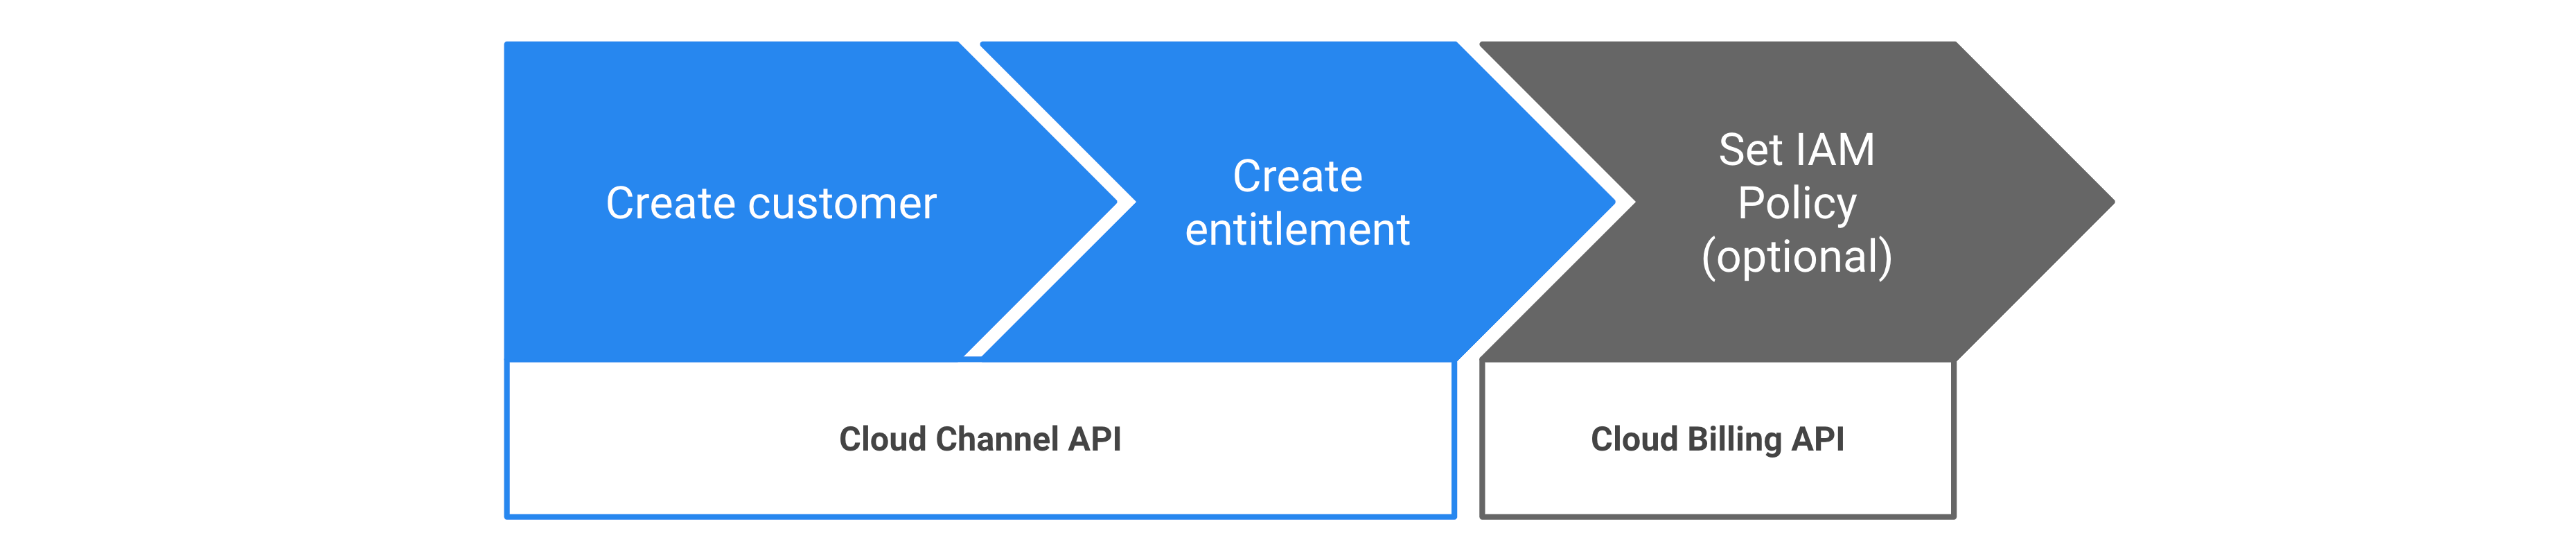 Langkah-langkah untuk menyediakan hak Google Cloud melalui Cloud Channel API